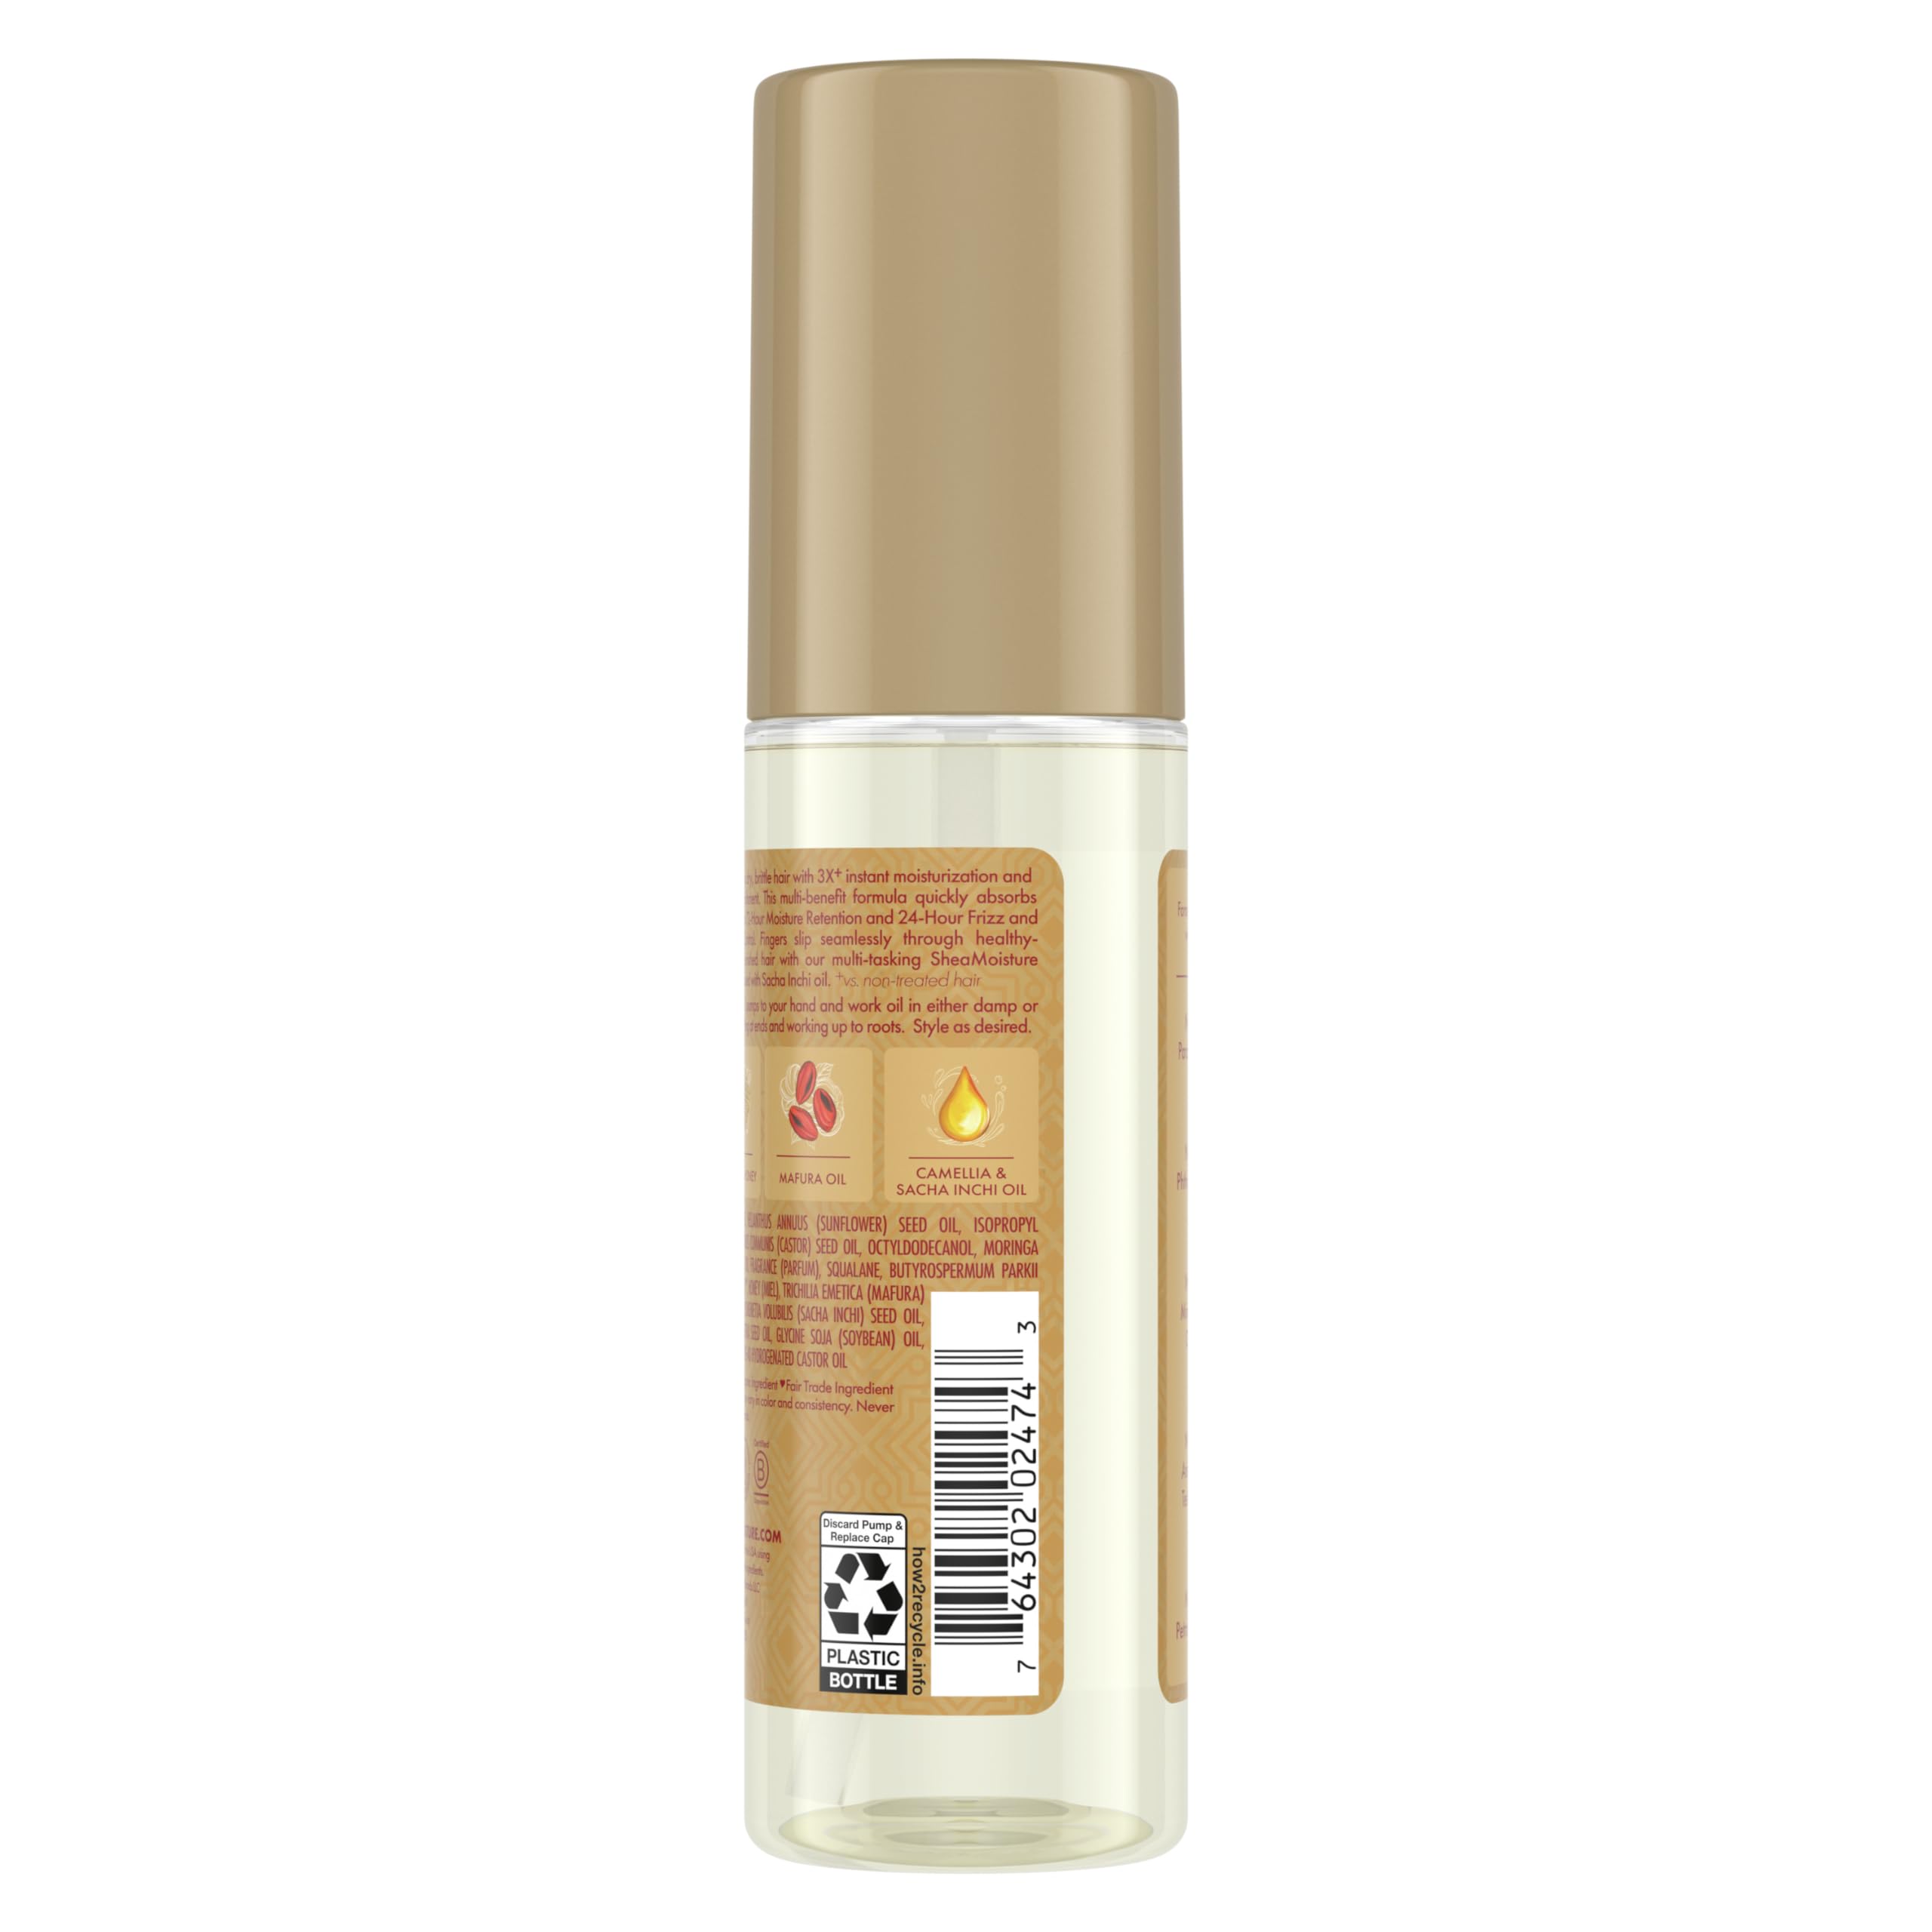 Shea Moisture Hair Oil Manuka Honey & Mafura Oil Ultra Moisture & Nourish to Soften and Smooth Hair 3.3 oz